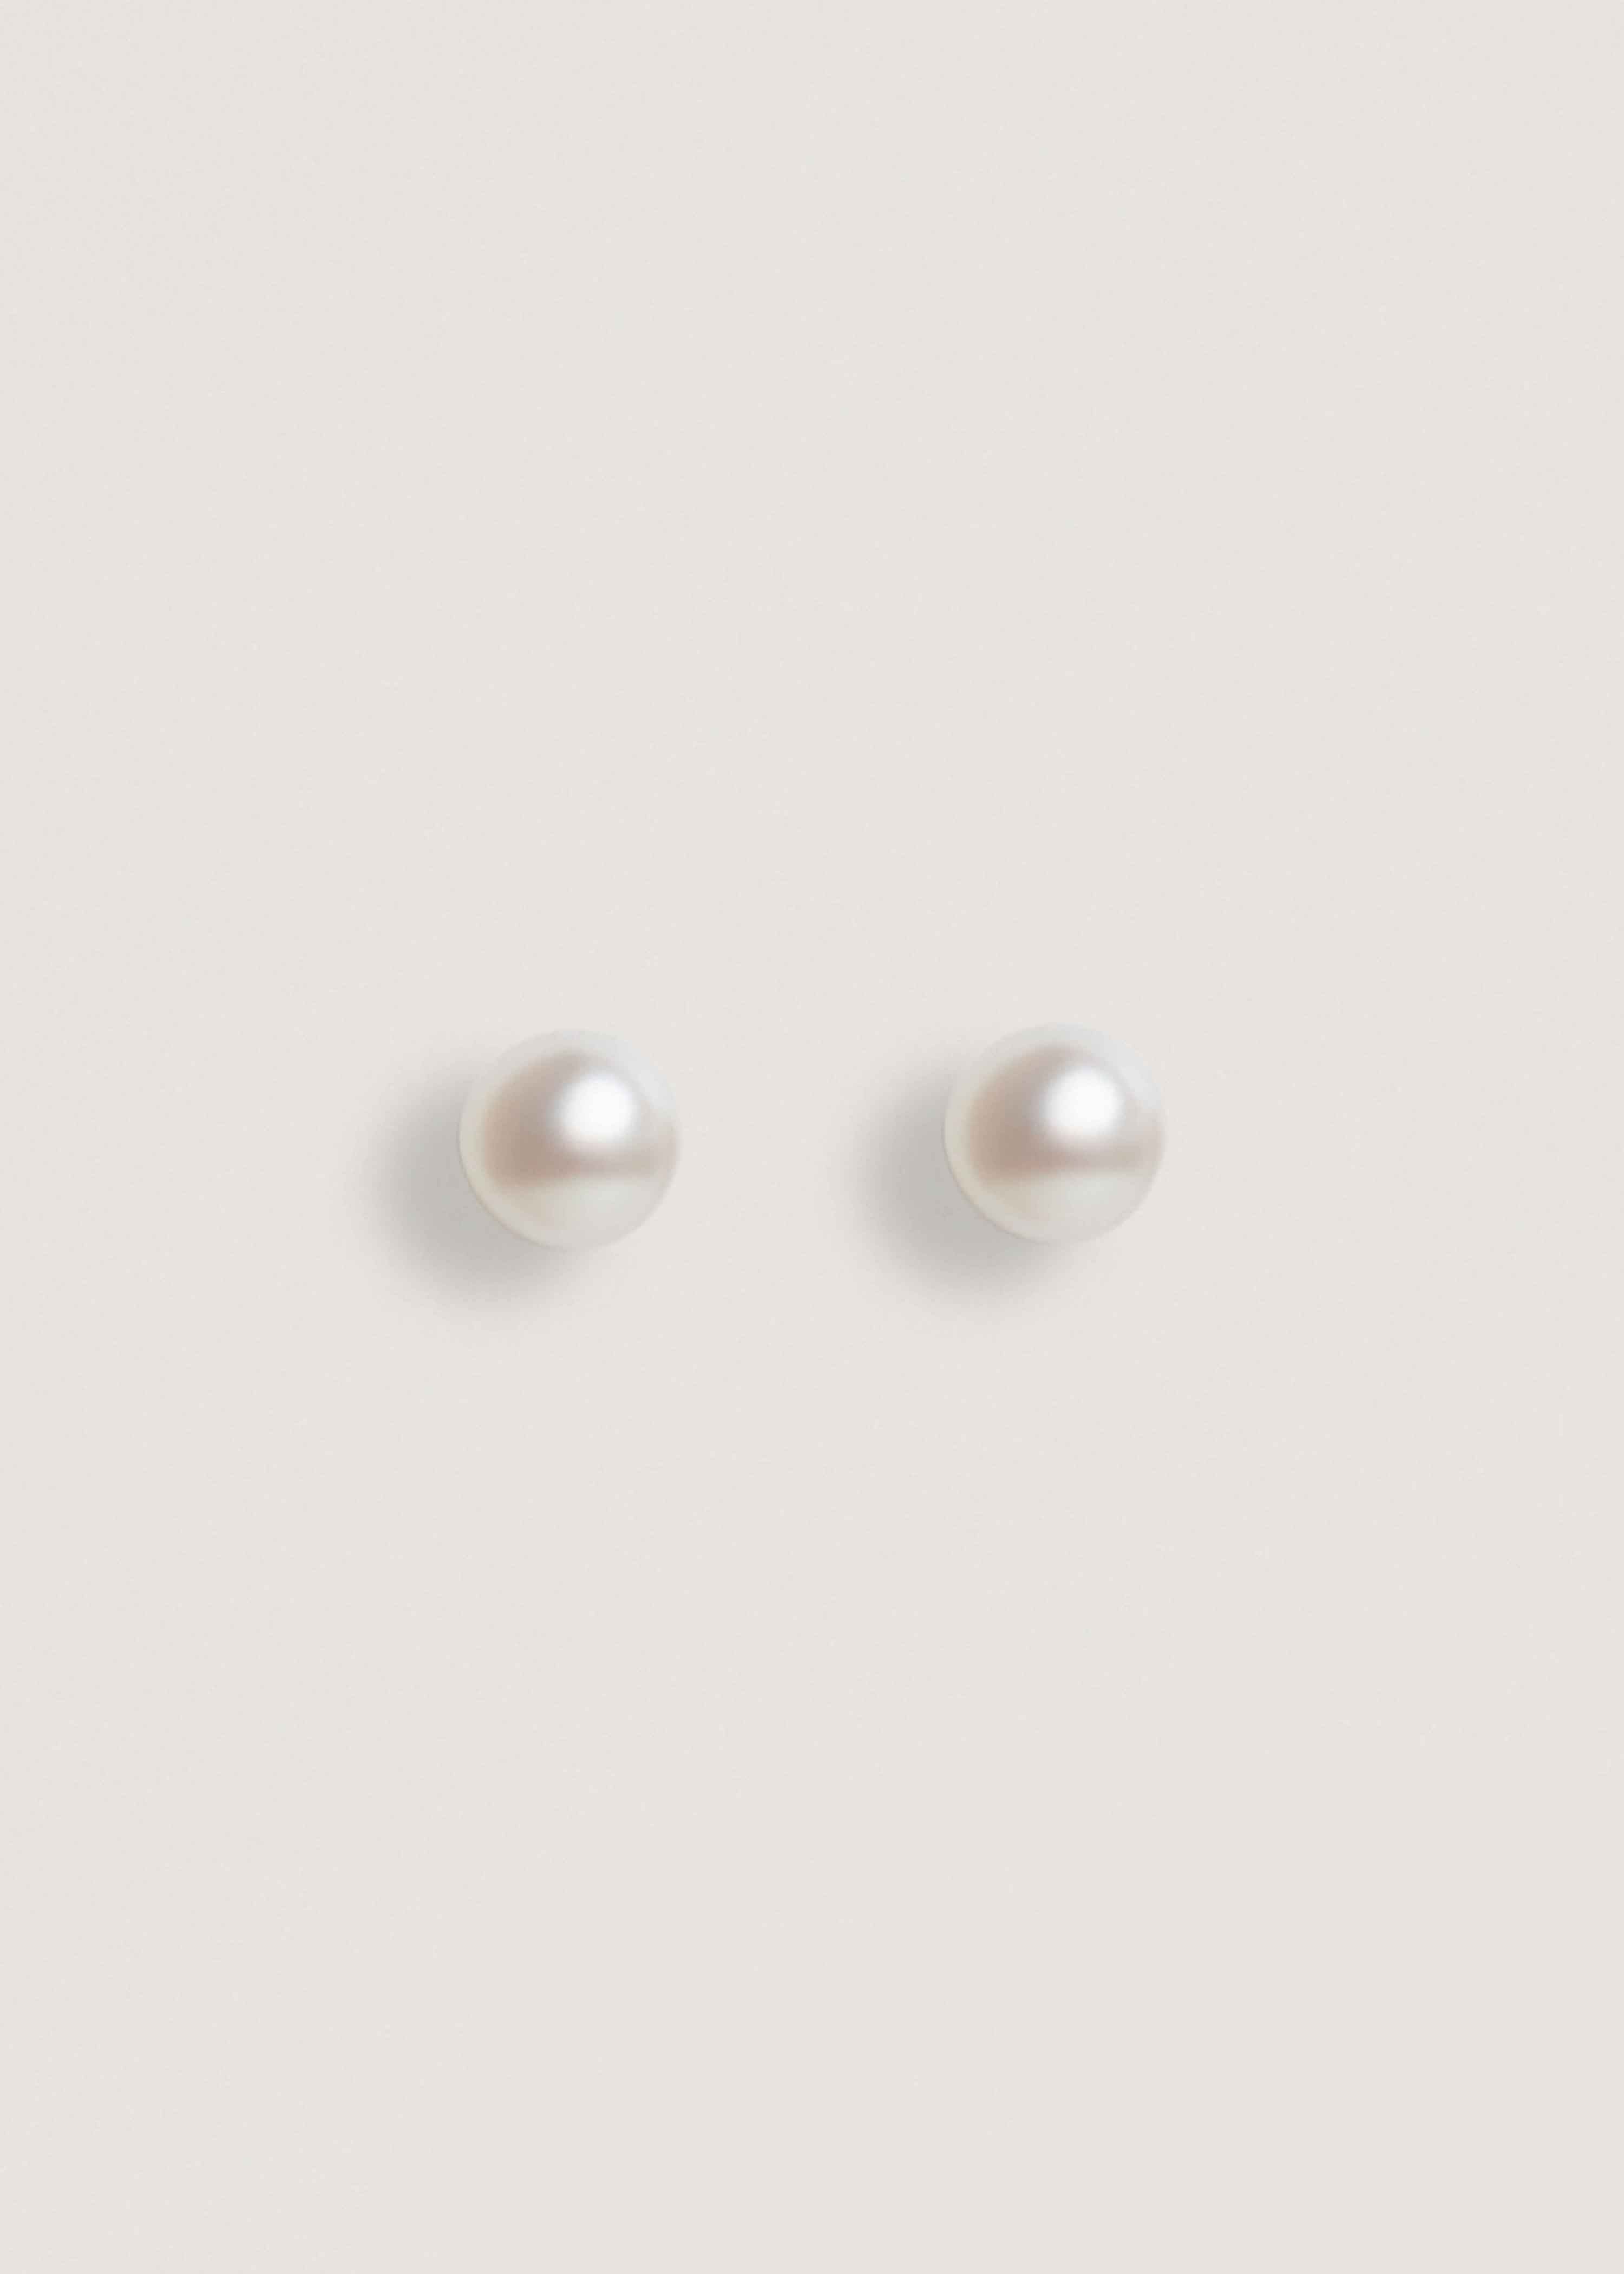 alt="Pearl Stud Earrings"